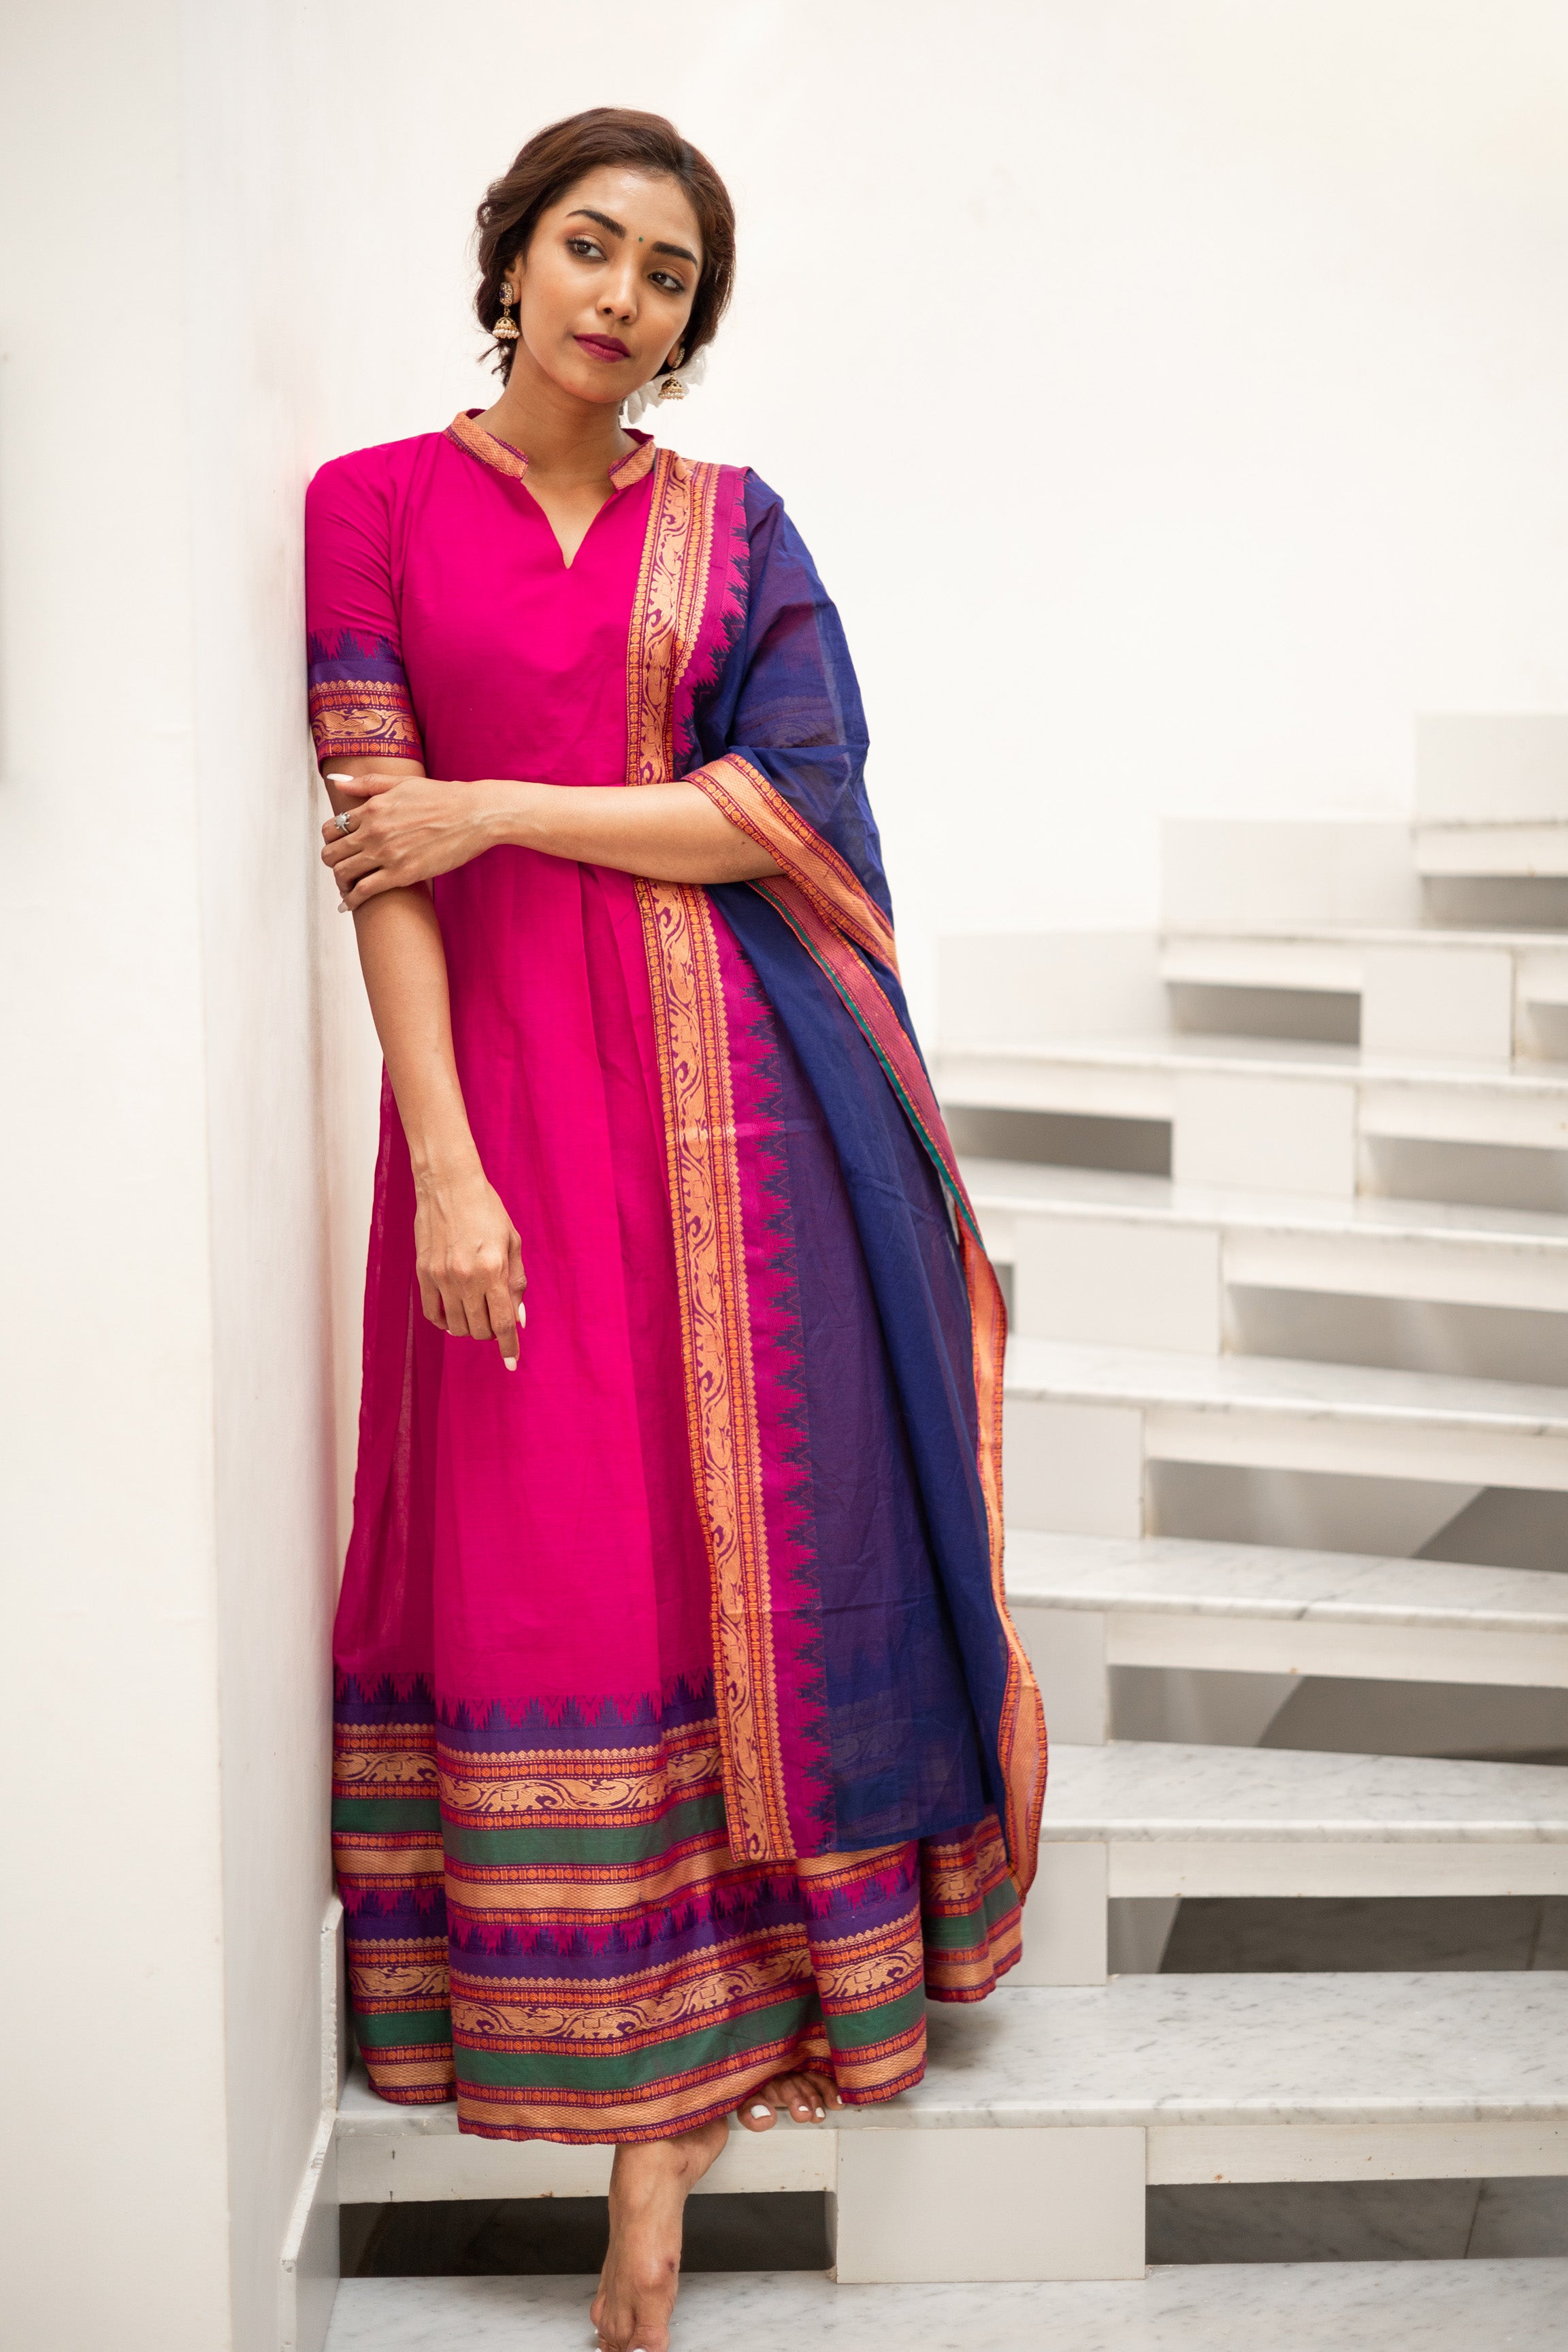 Blue and Pink Wedding Wear Jacquard Lehenga Choli, 2.25m at Rs 1500 in Surat